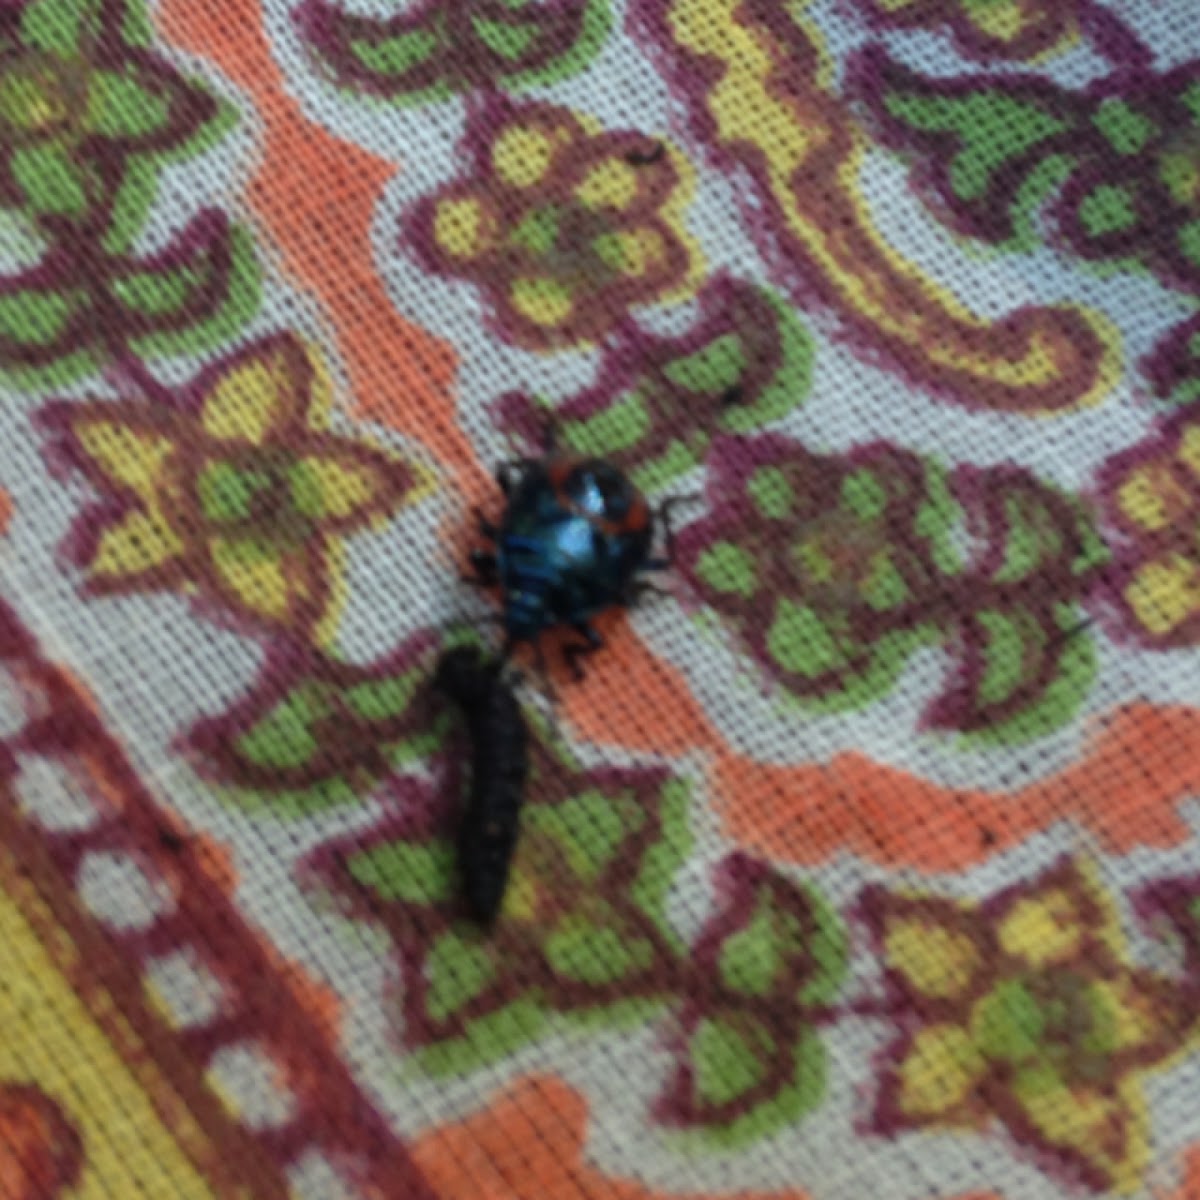 Predatory stink bug (nymph)